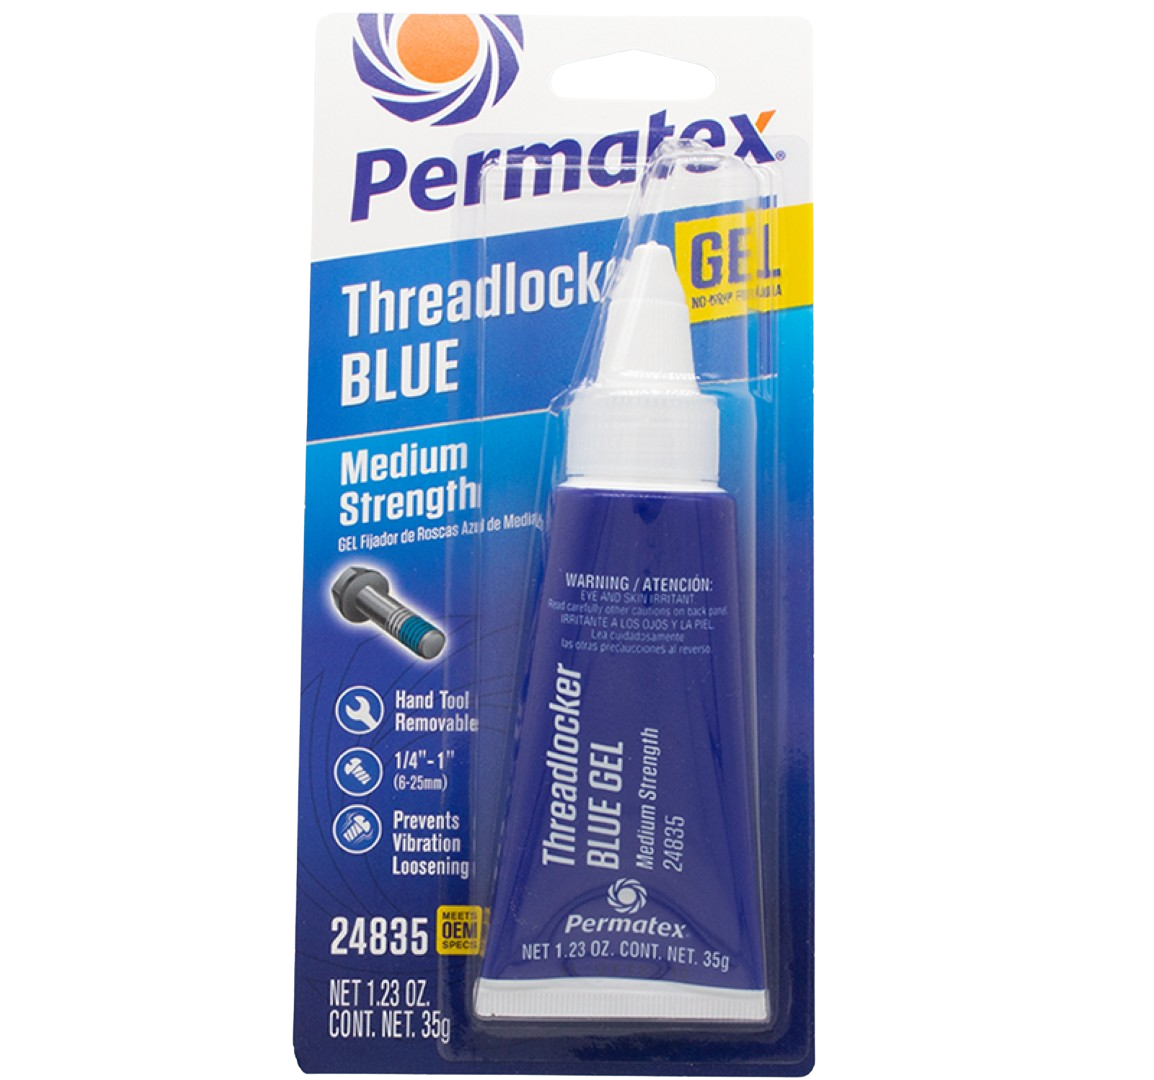 Permatex<span class="sup">®</span> Medium Strength Threadlocker Blue Gel, 35 G